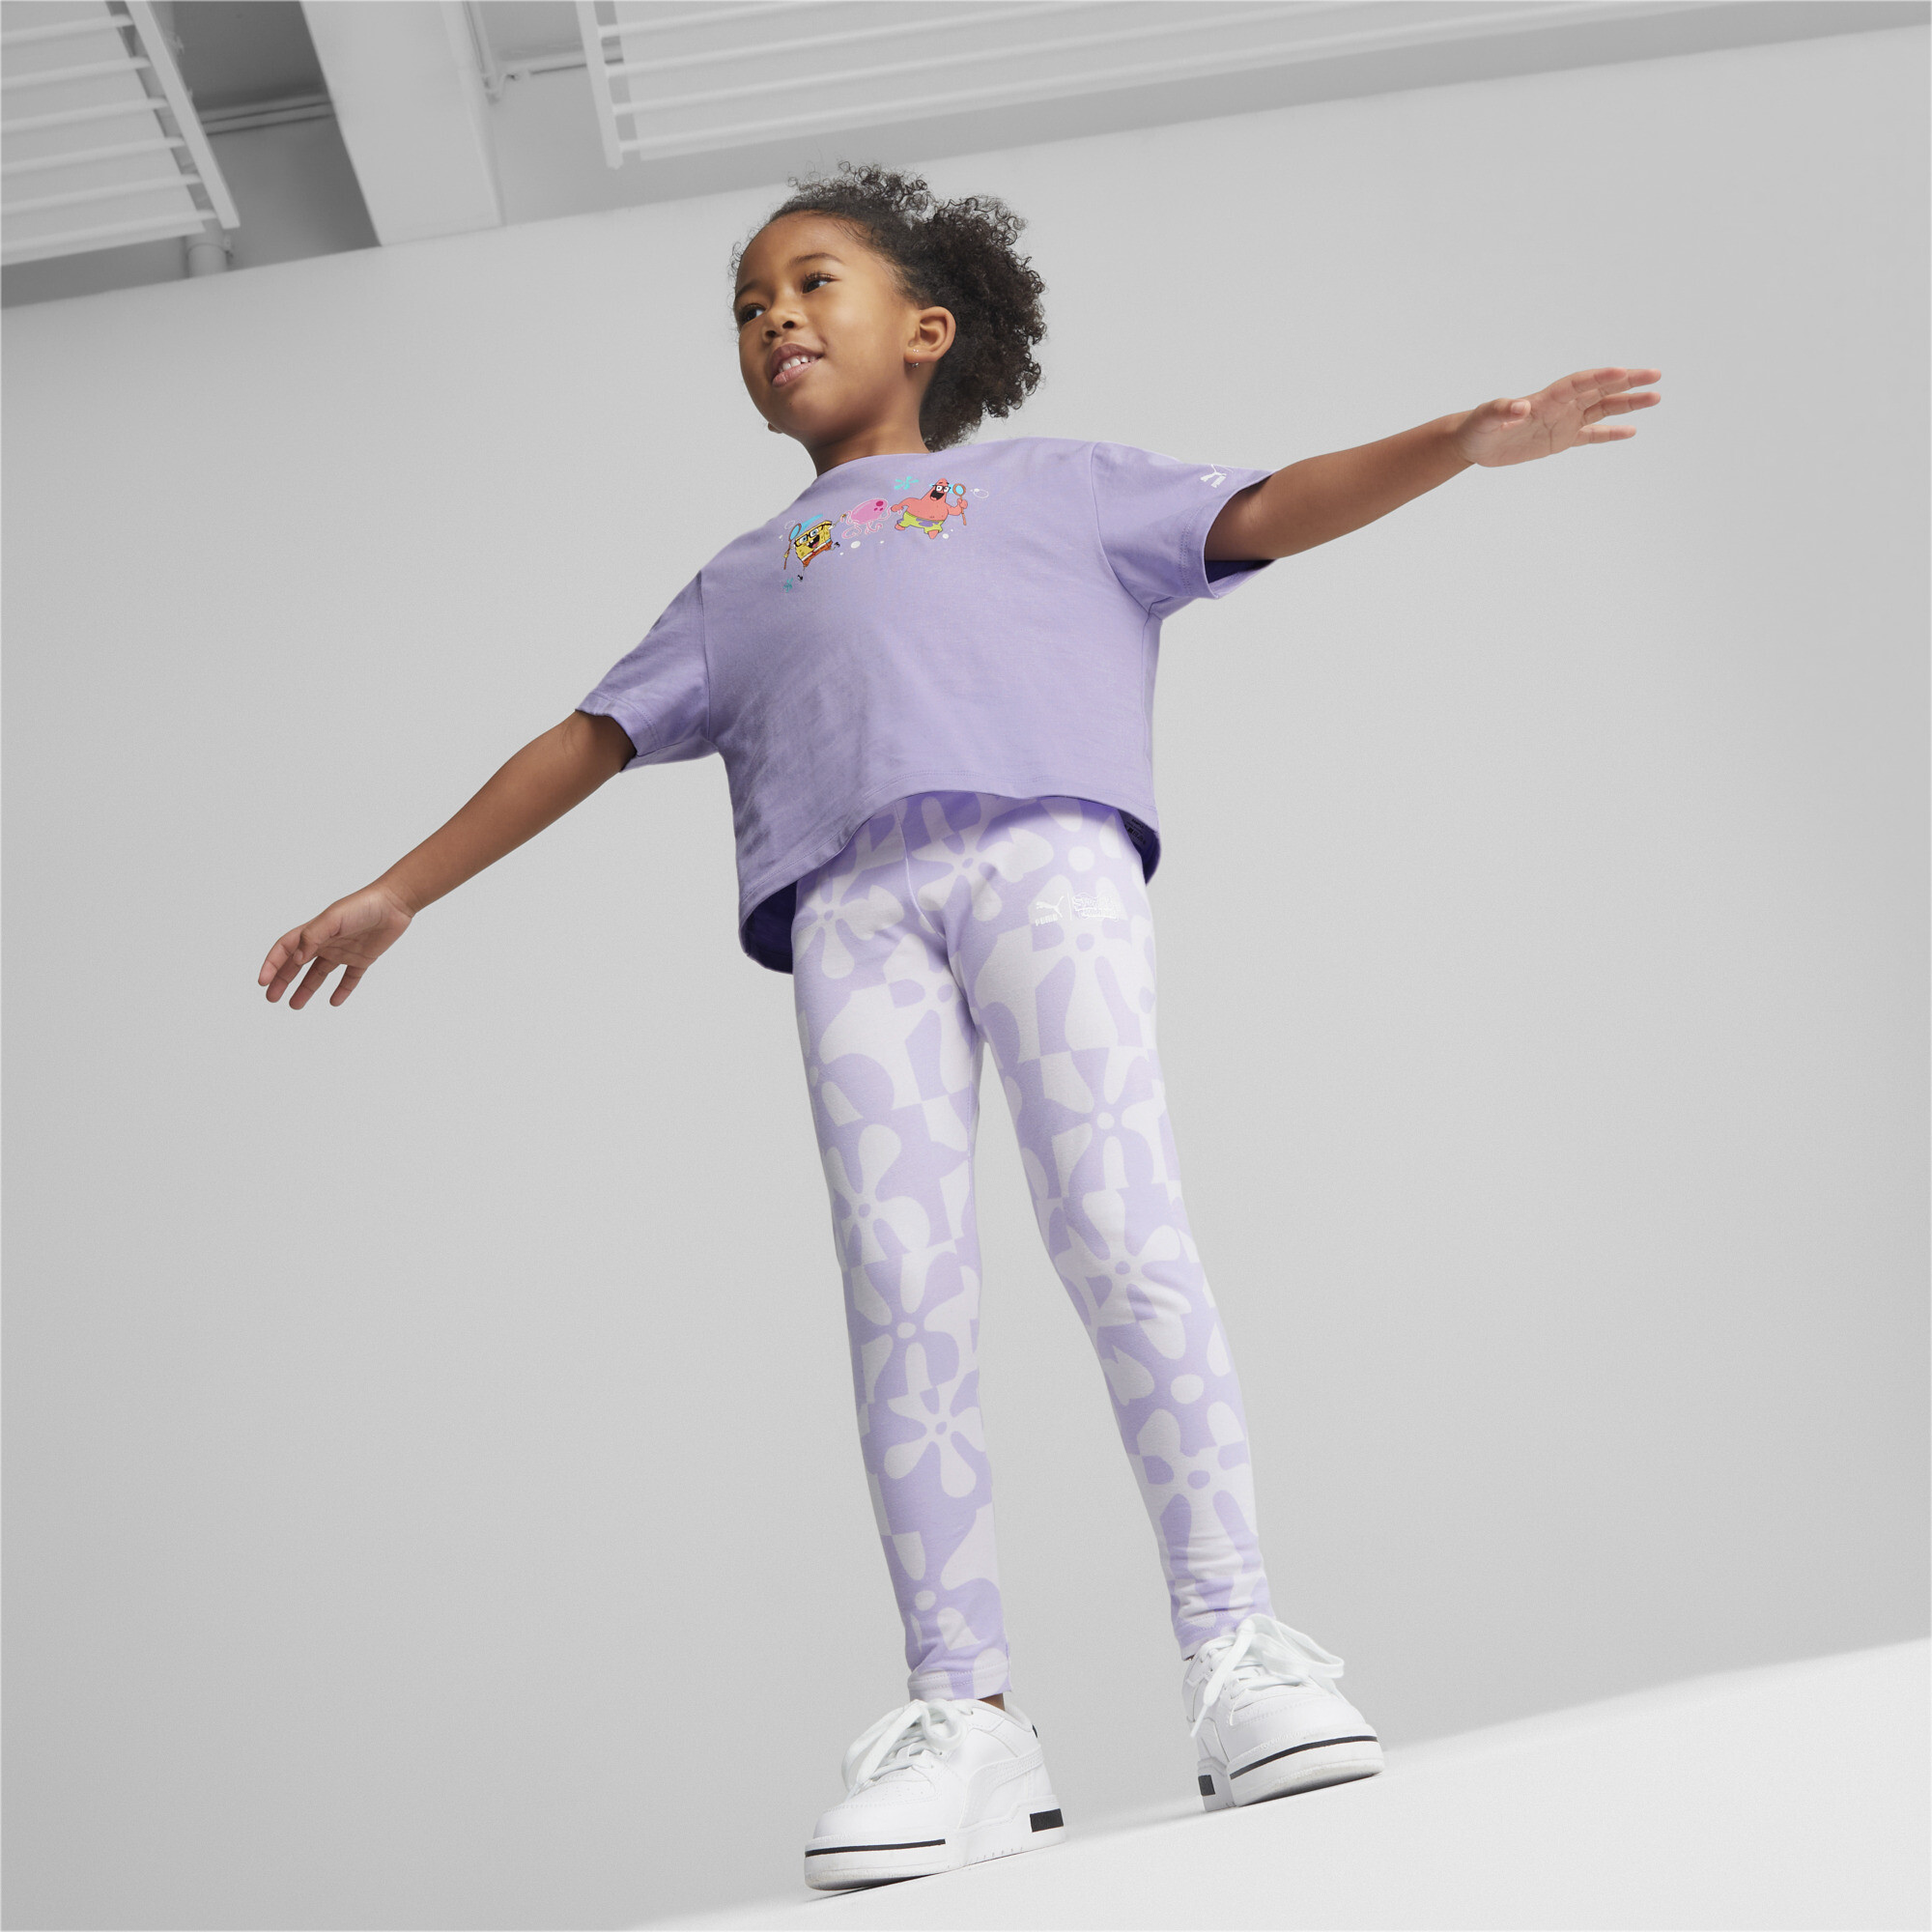 PUMA X SPONGEBOB T-Shirt Kids In Purple, Size 11-12 Youth